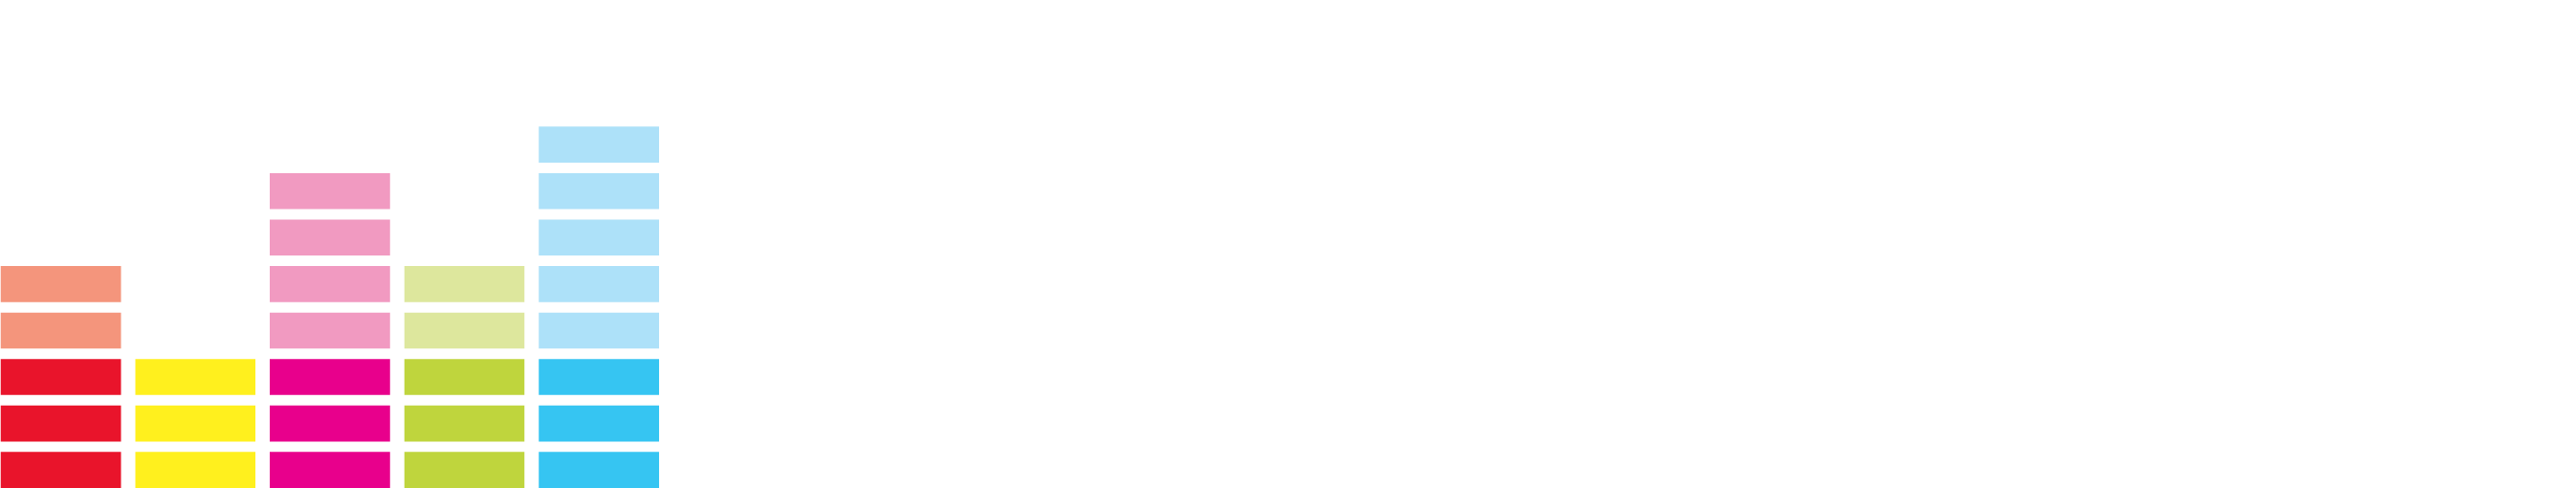 Deezapper